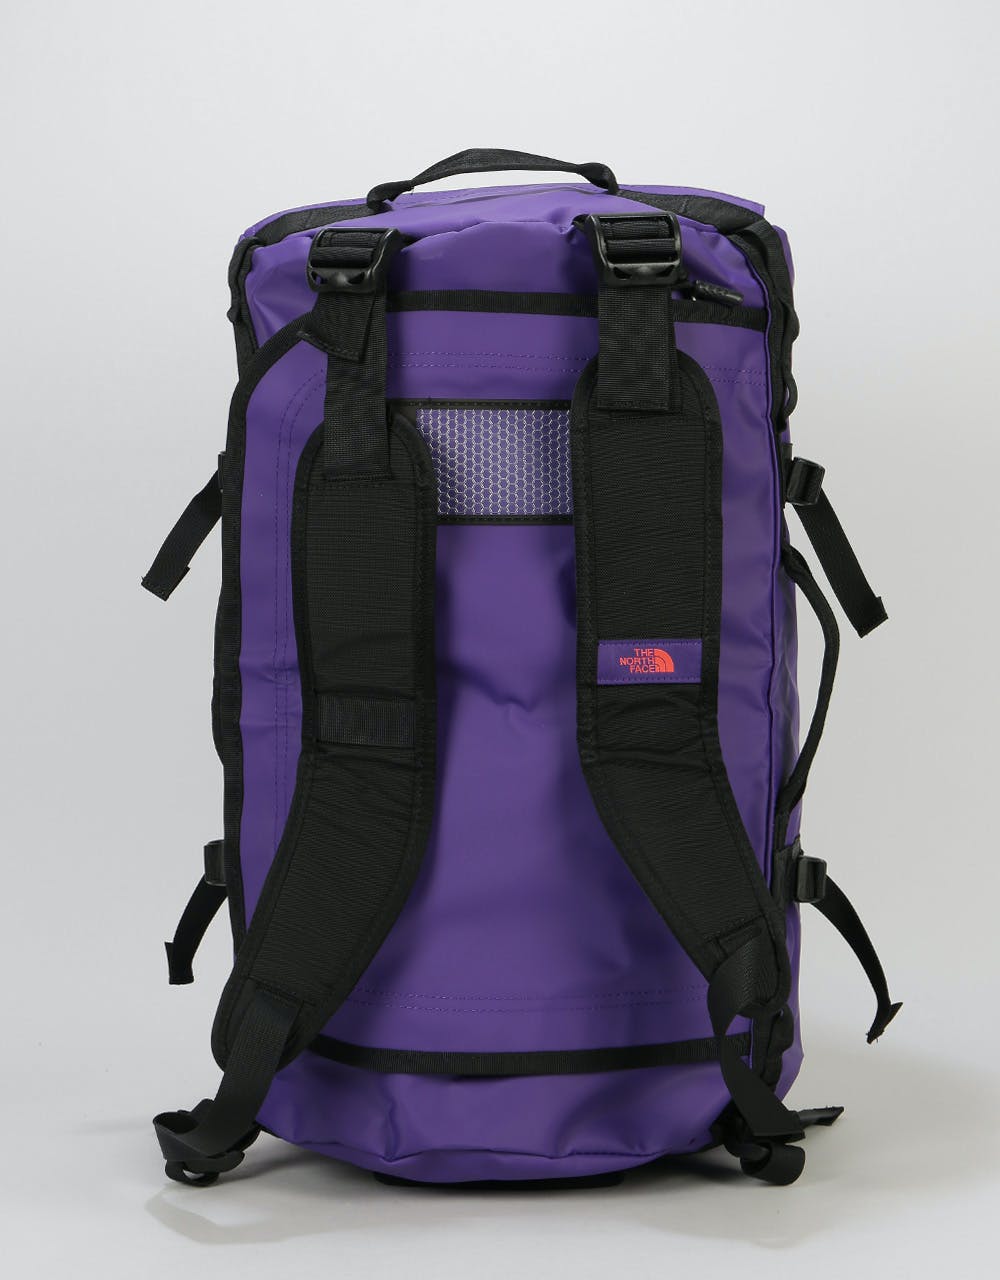 The North Face Base Camp Small Duffel Bag - Hero Purple/TNF Black